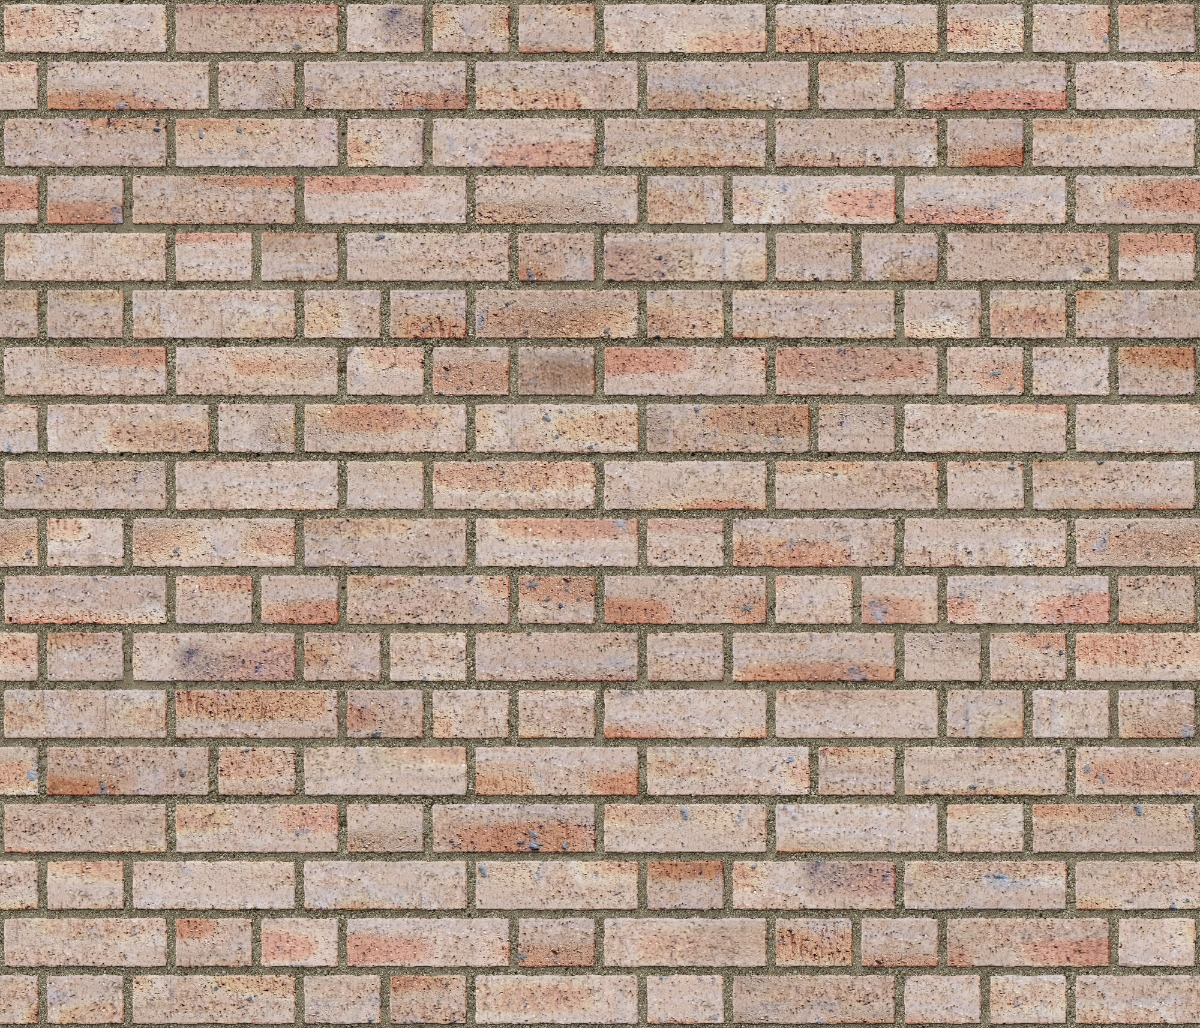 A seamless brick texture with dragfaced brick units arranged in a Random Bond pattern